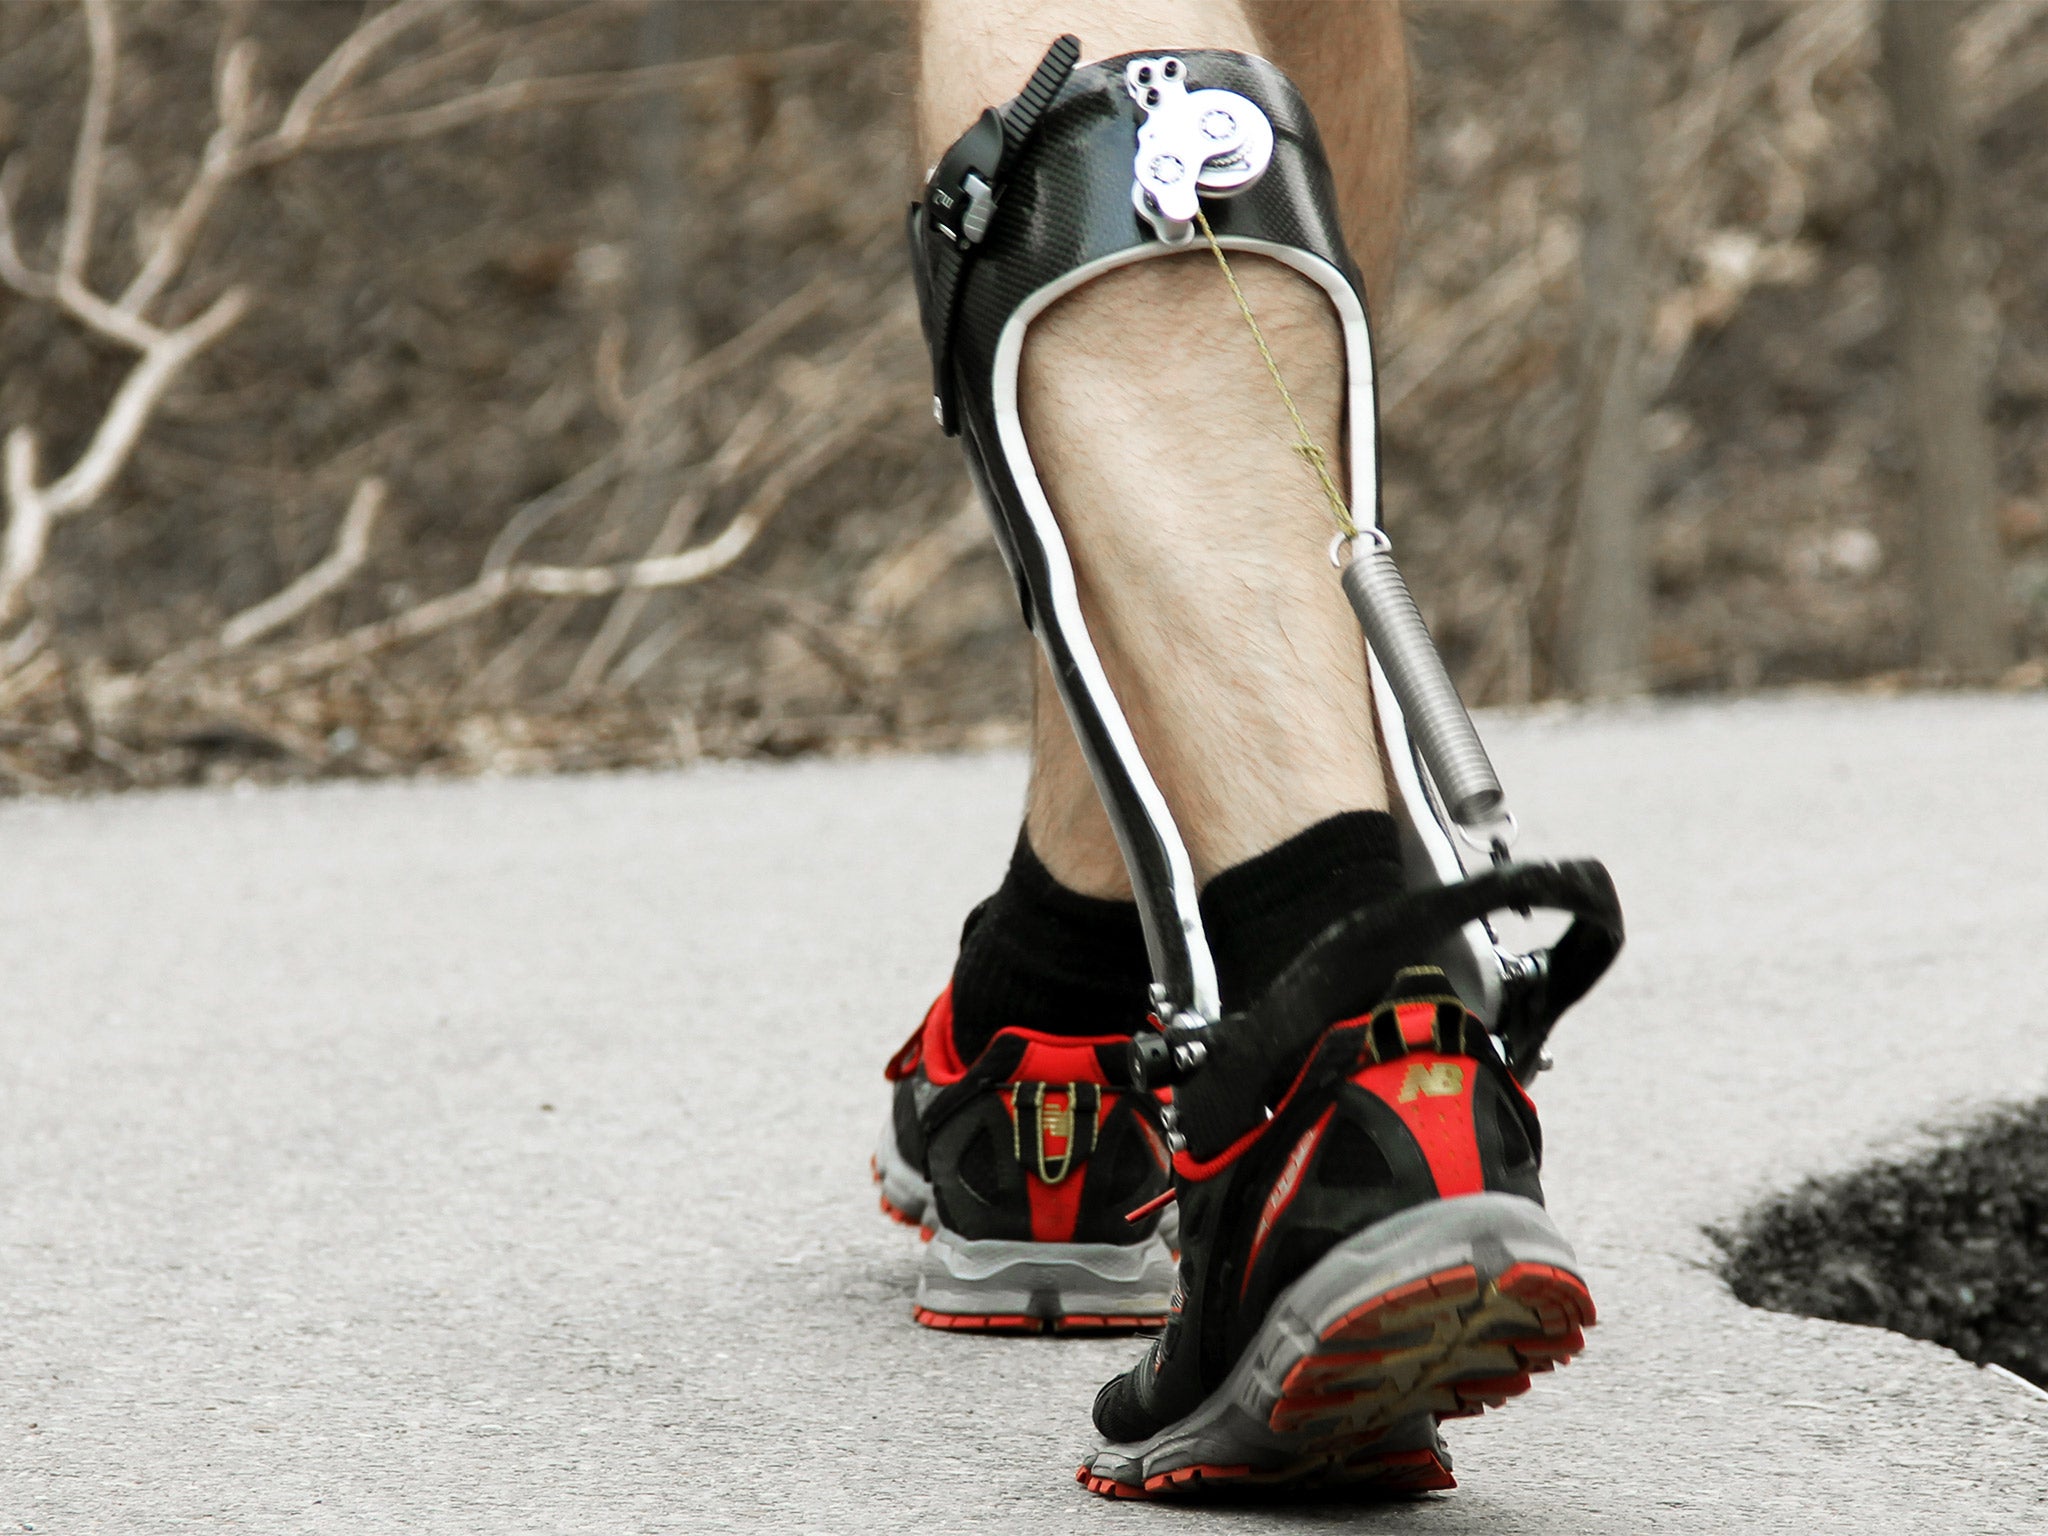 Scientists develop mechanical spring-loaded leg brace to improve